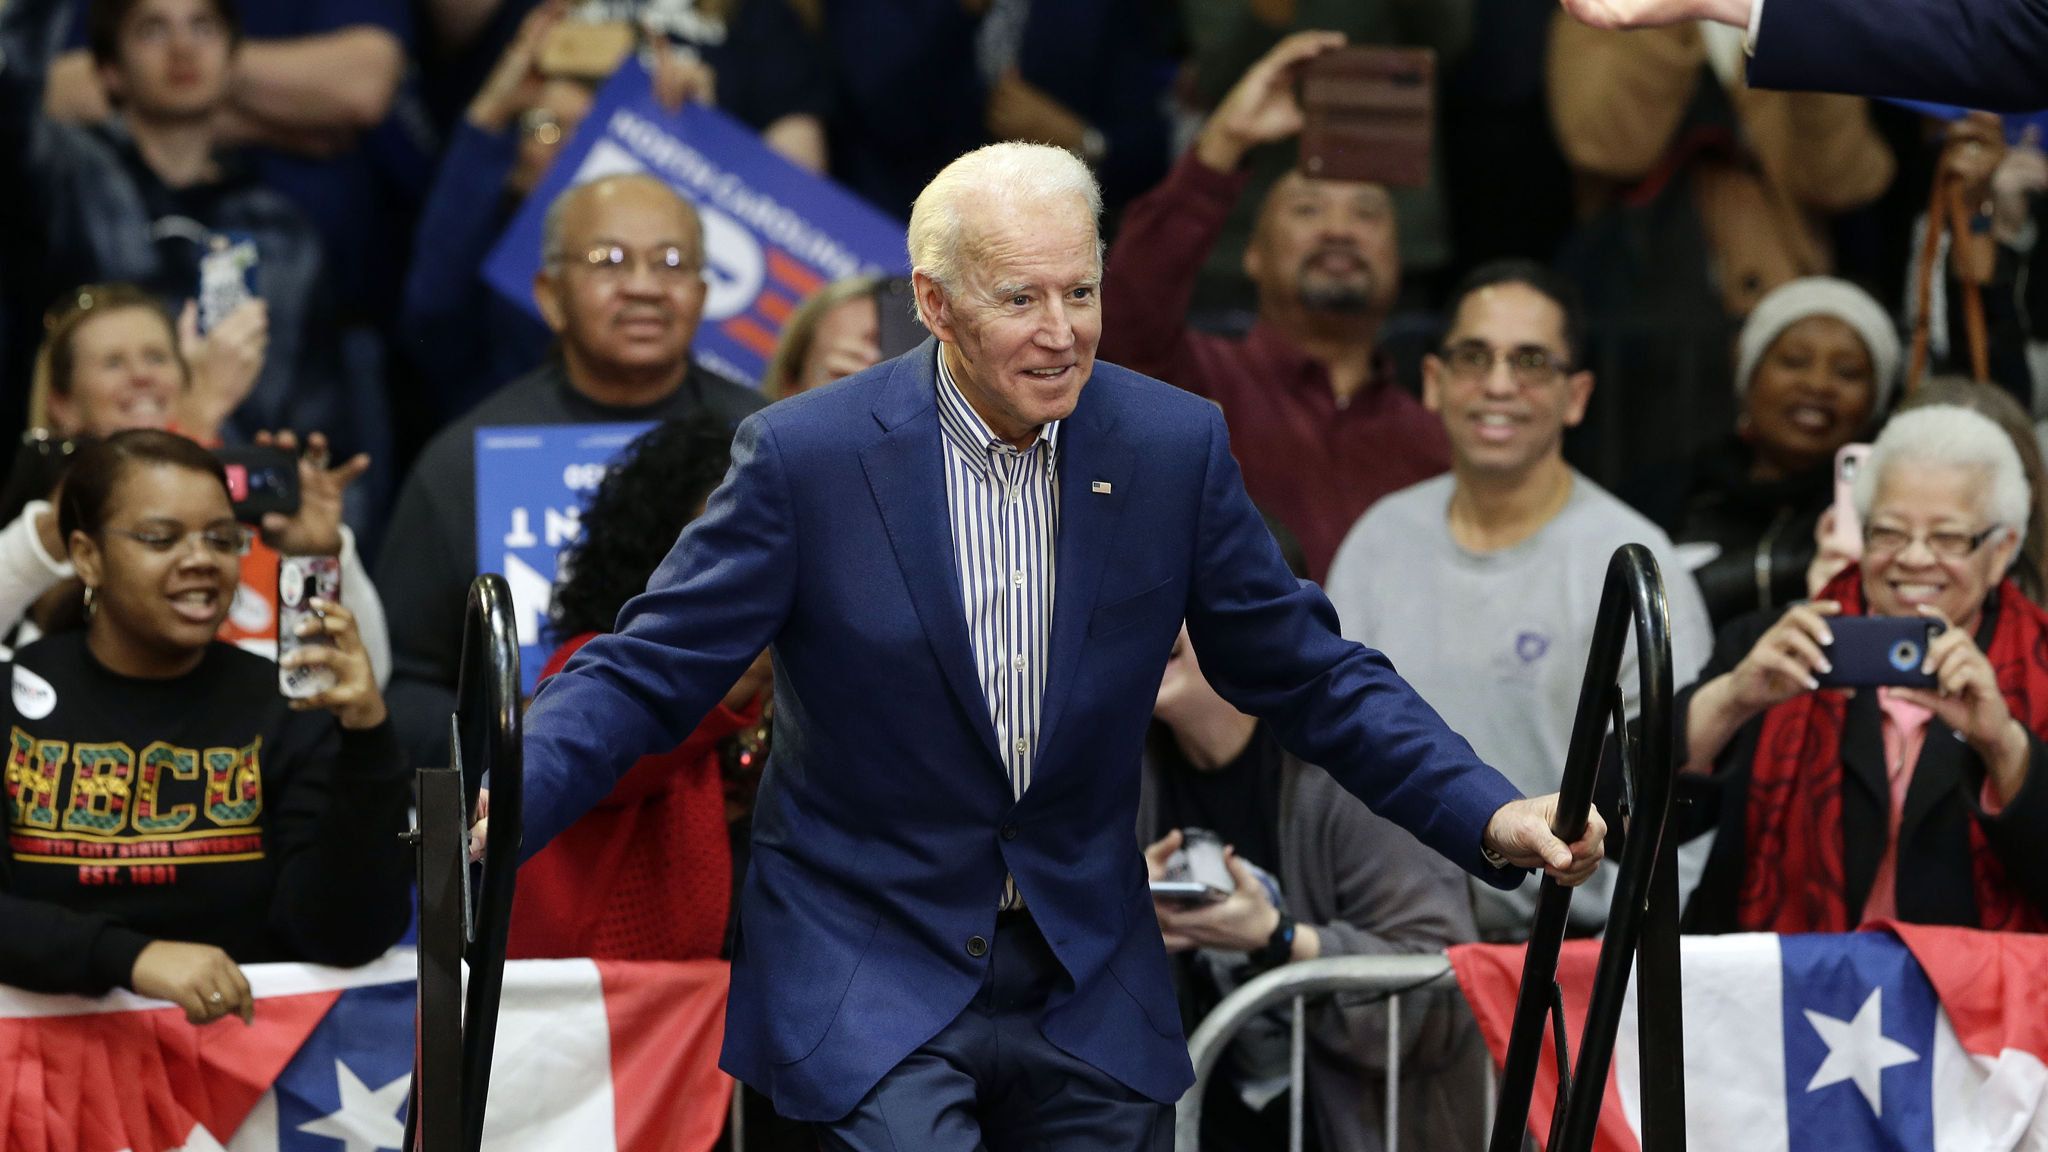 Joe Biden wins big in South Carolina primary